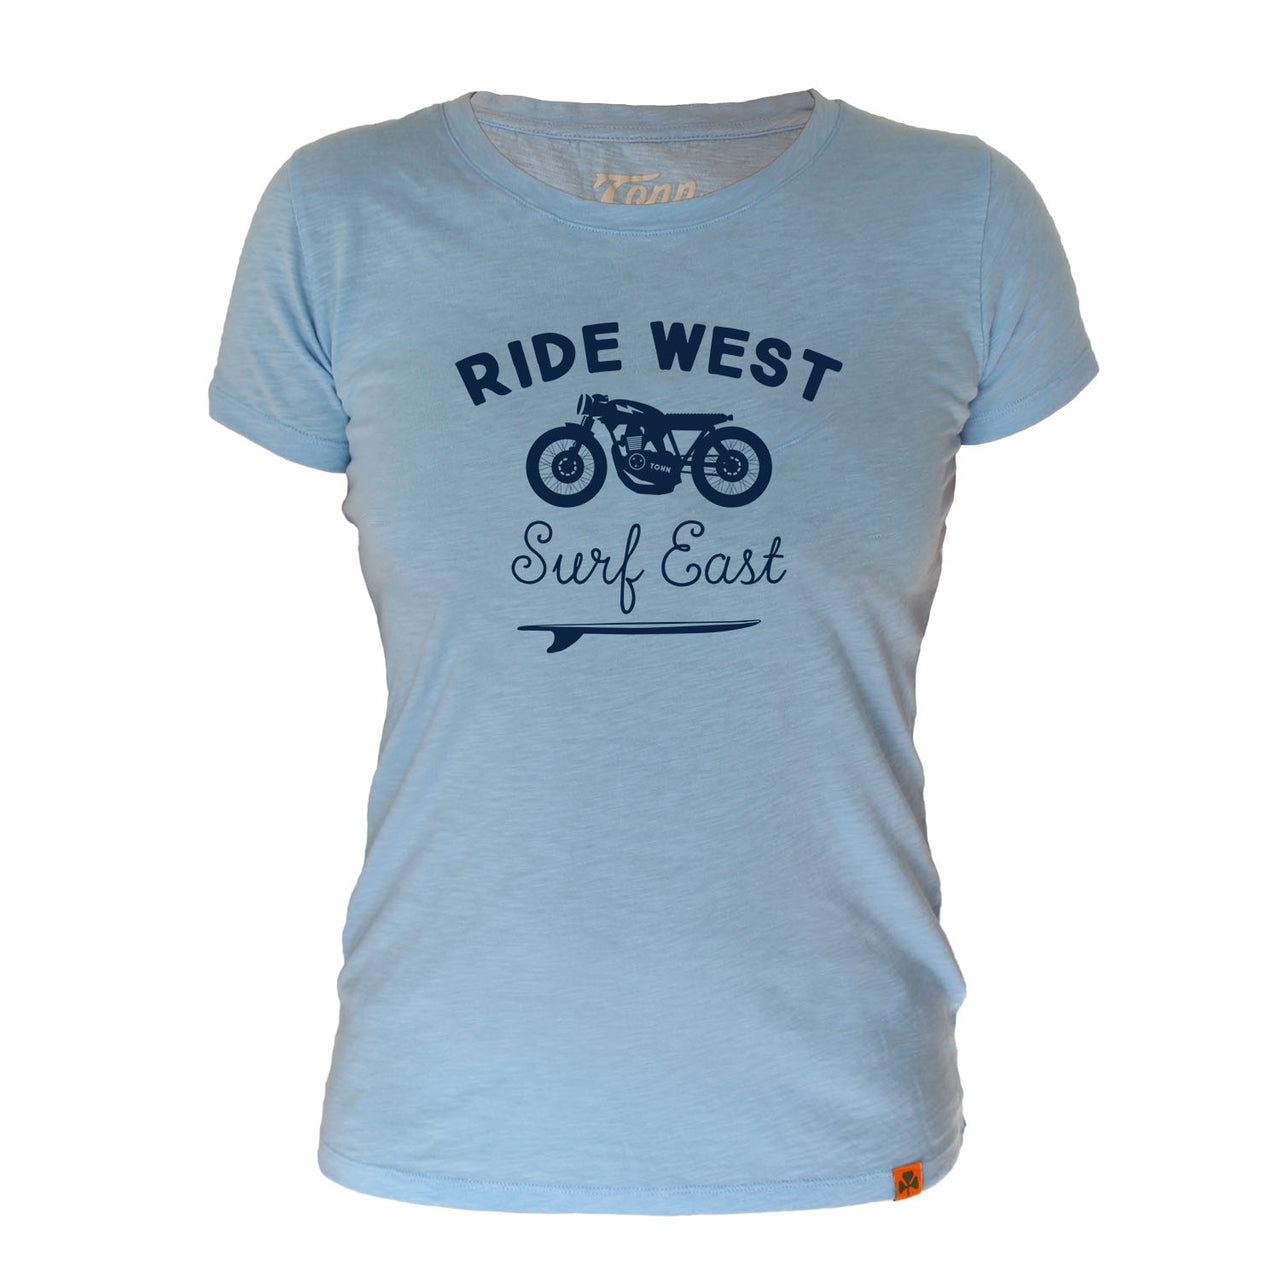 Ladies Ride west tee light blue